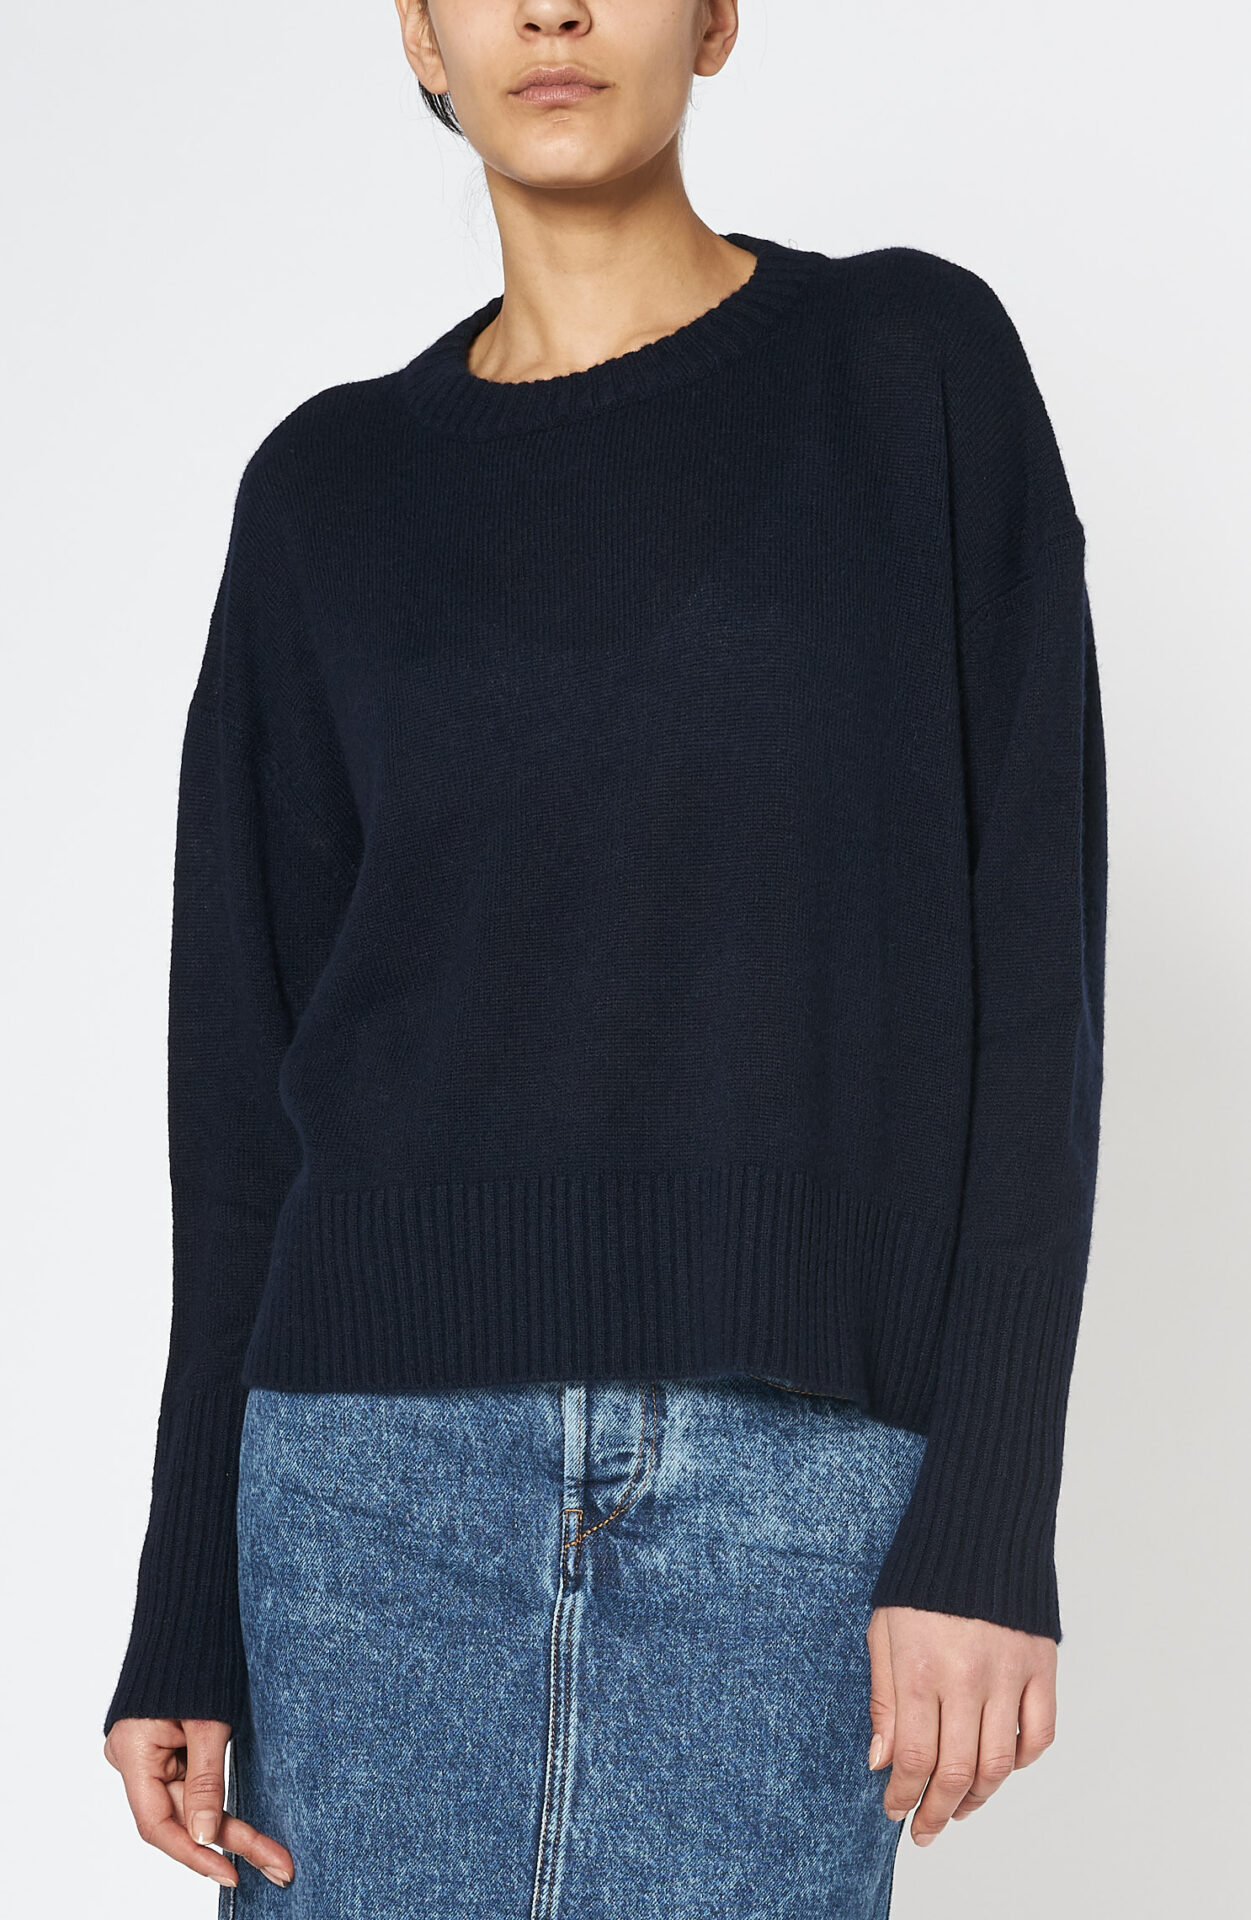 Antonia Zander - Dark blue sweater 